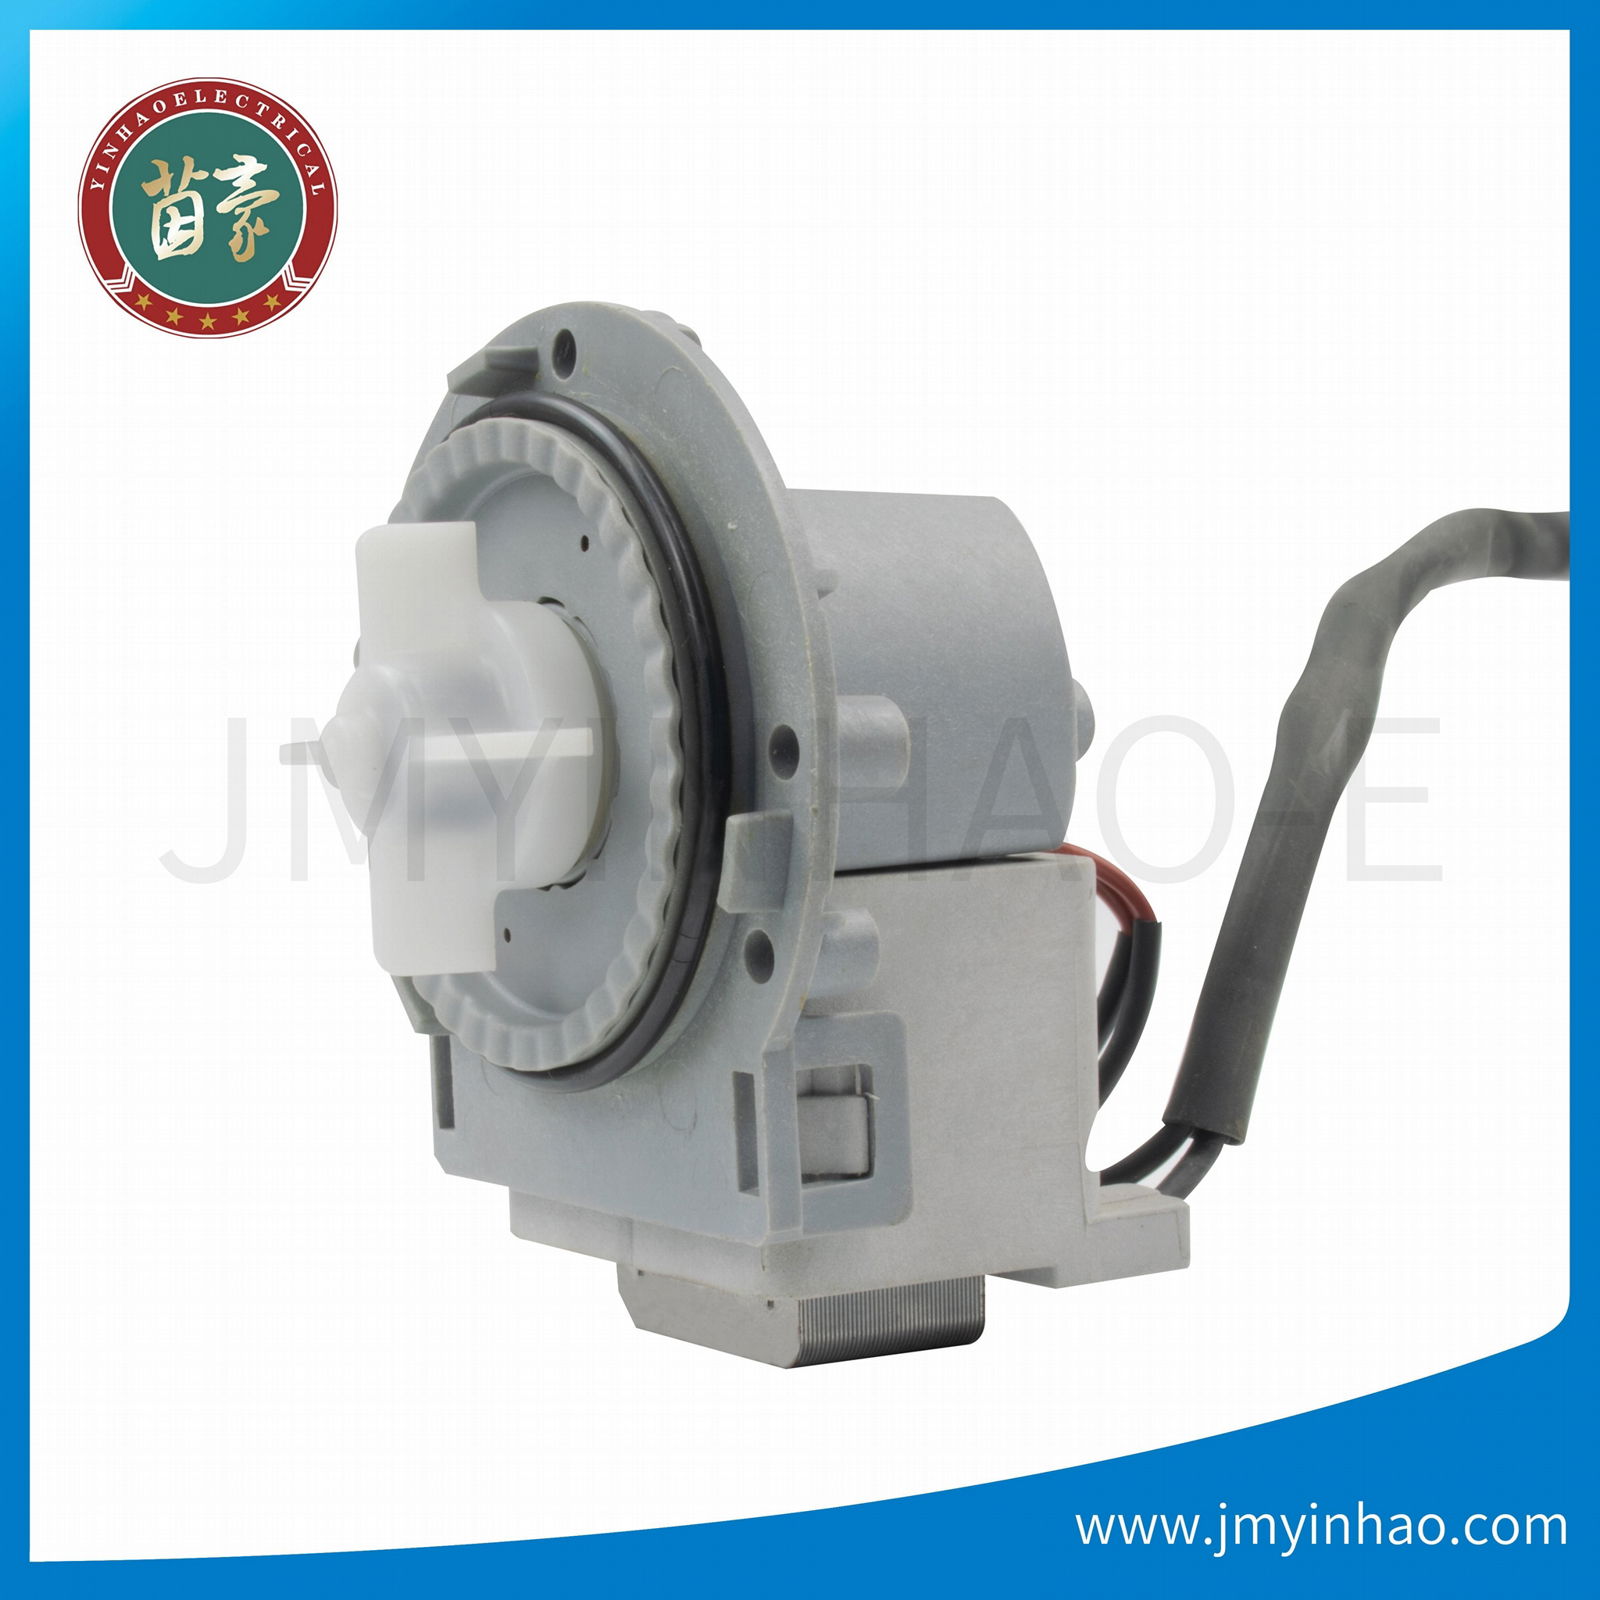 washing machine components/JMYINHAO-E/drain pump for washing machine